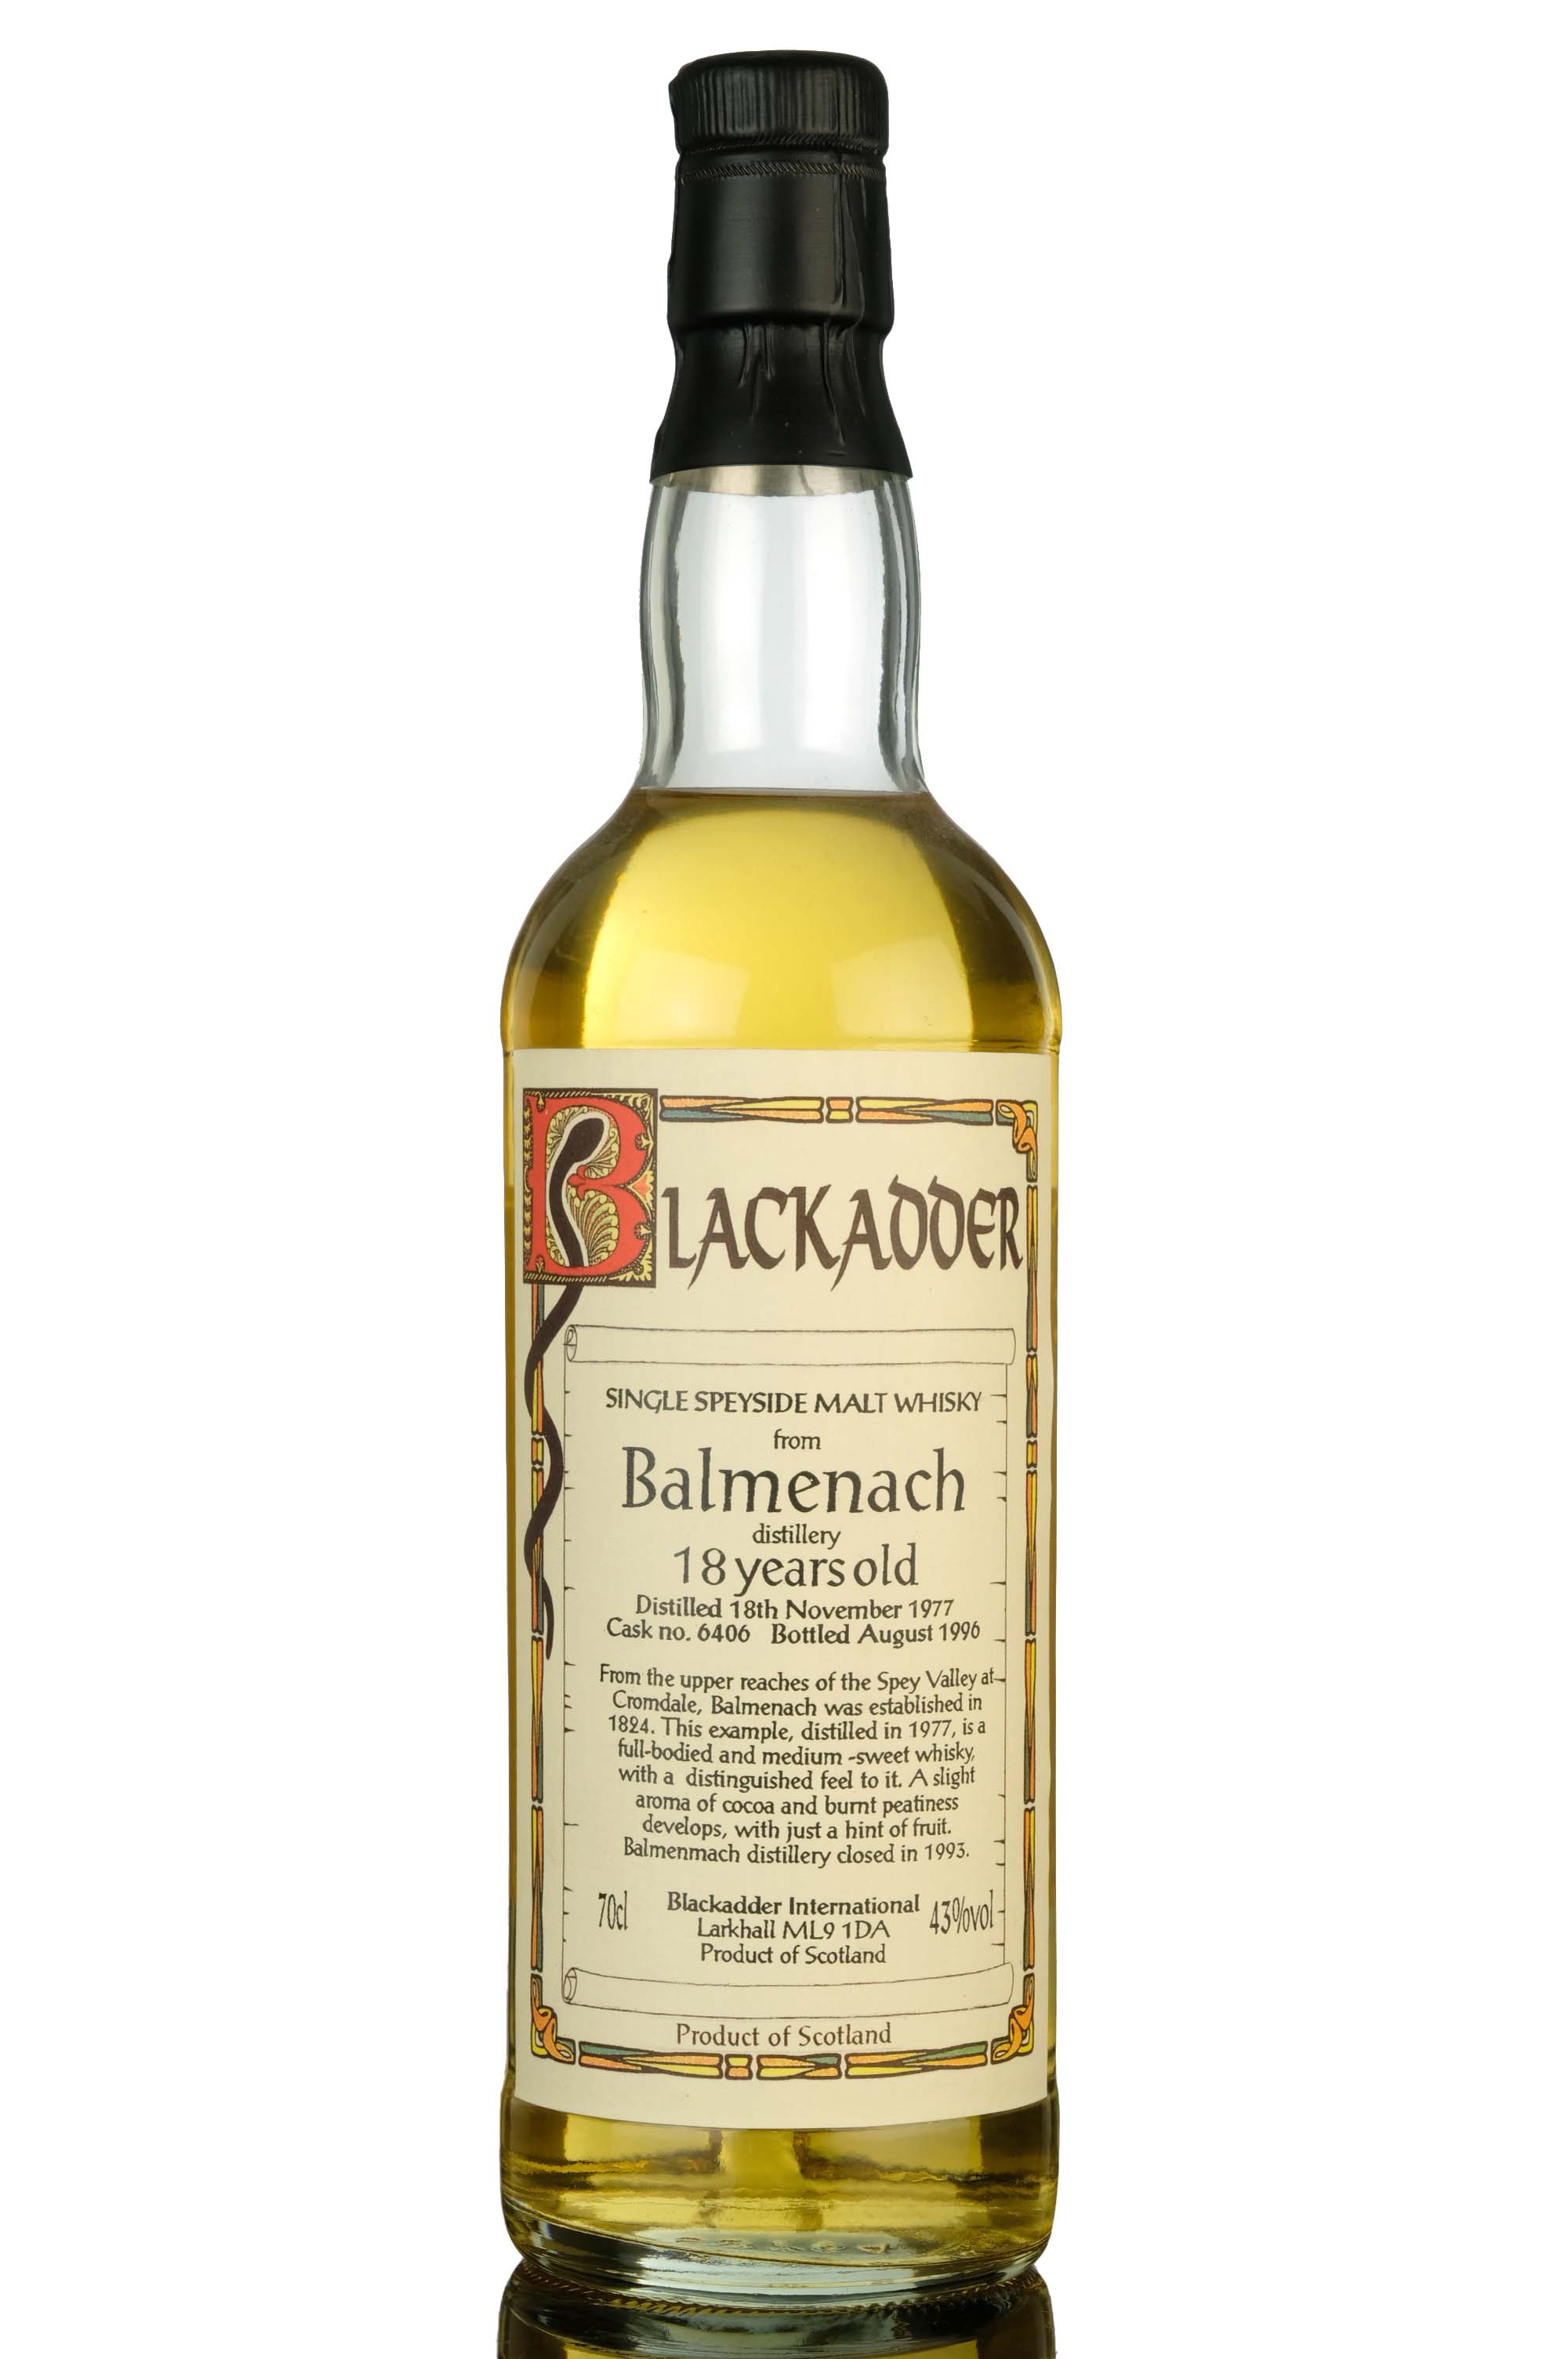 Balmenach 1977-1996 - 18 Year Old - Blackadder - Single Cask 6406